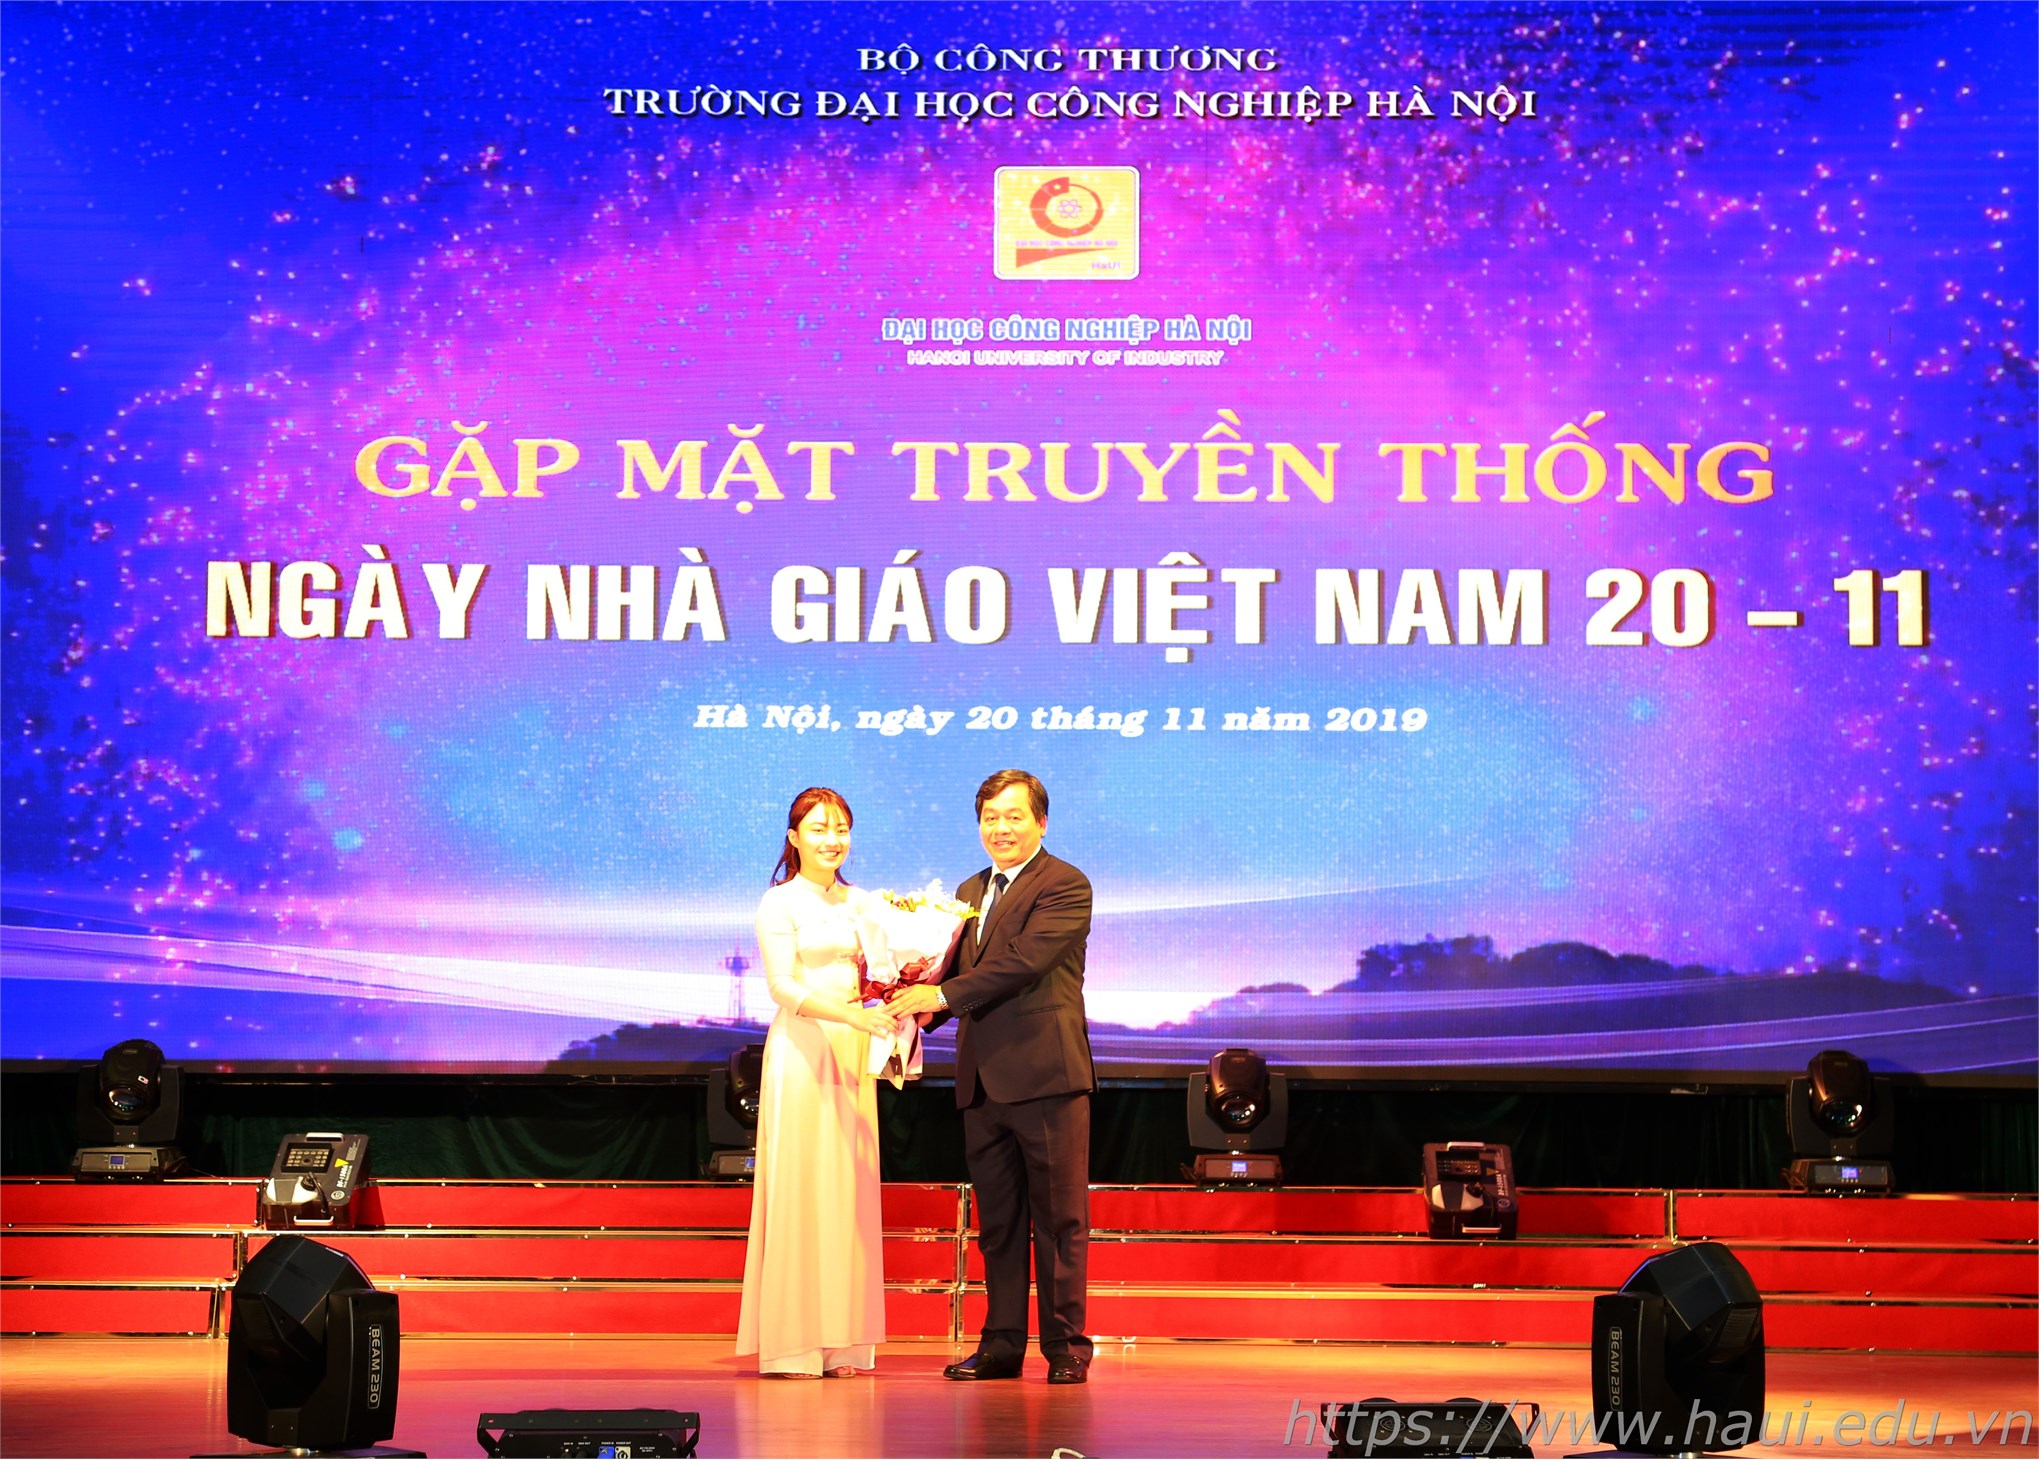 Meeting marks Vietnamese Teachers' Day 